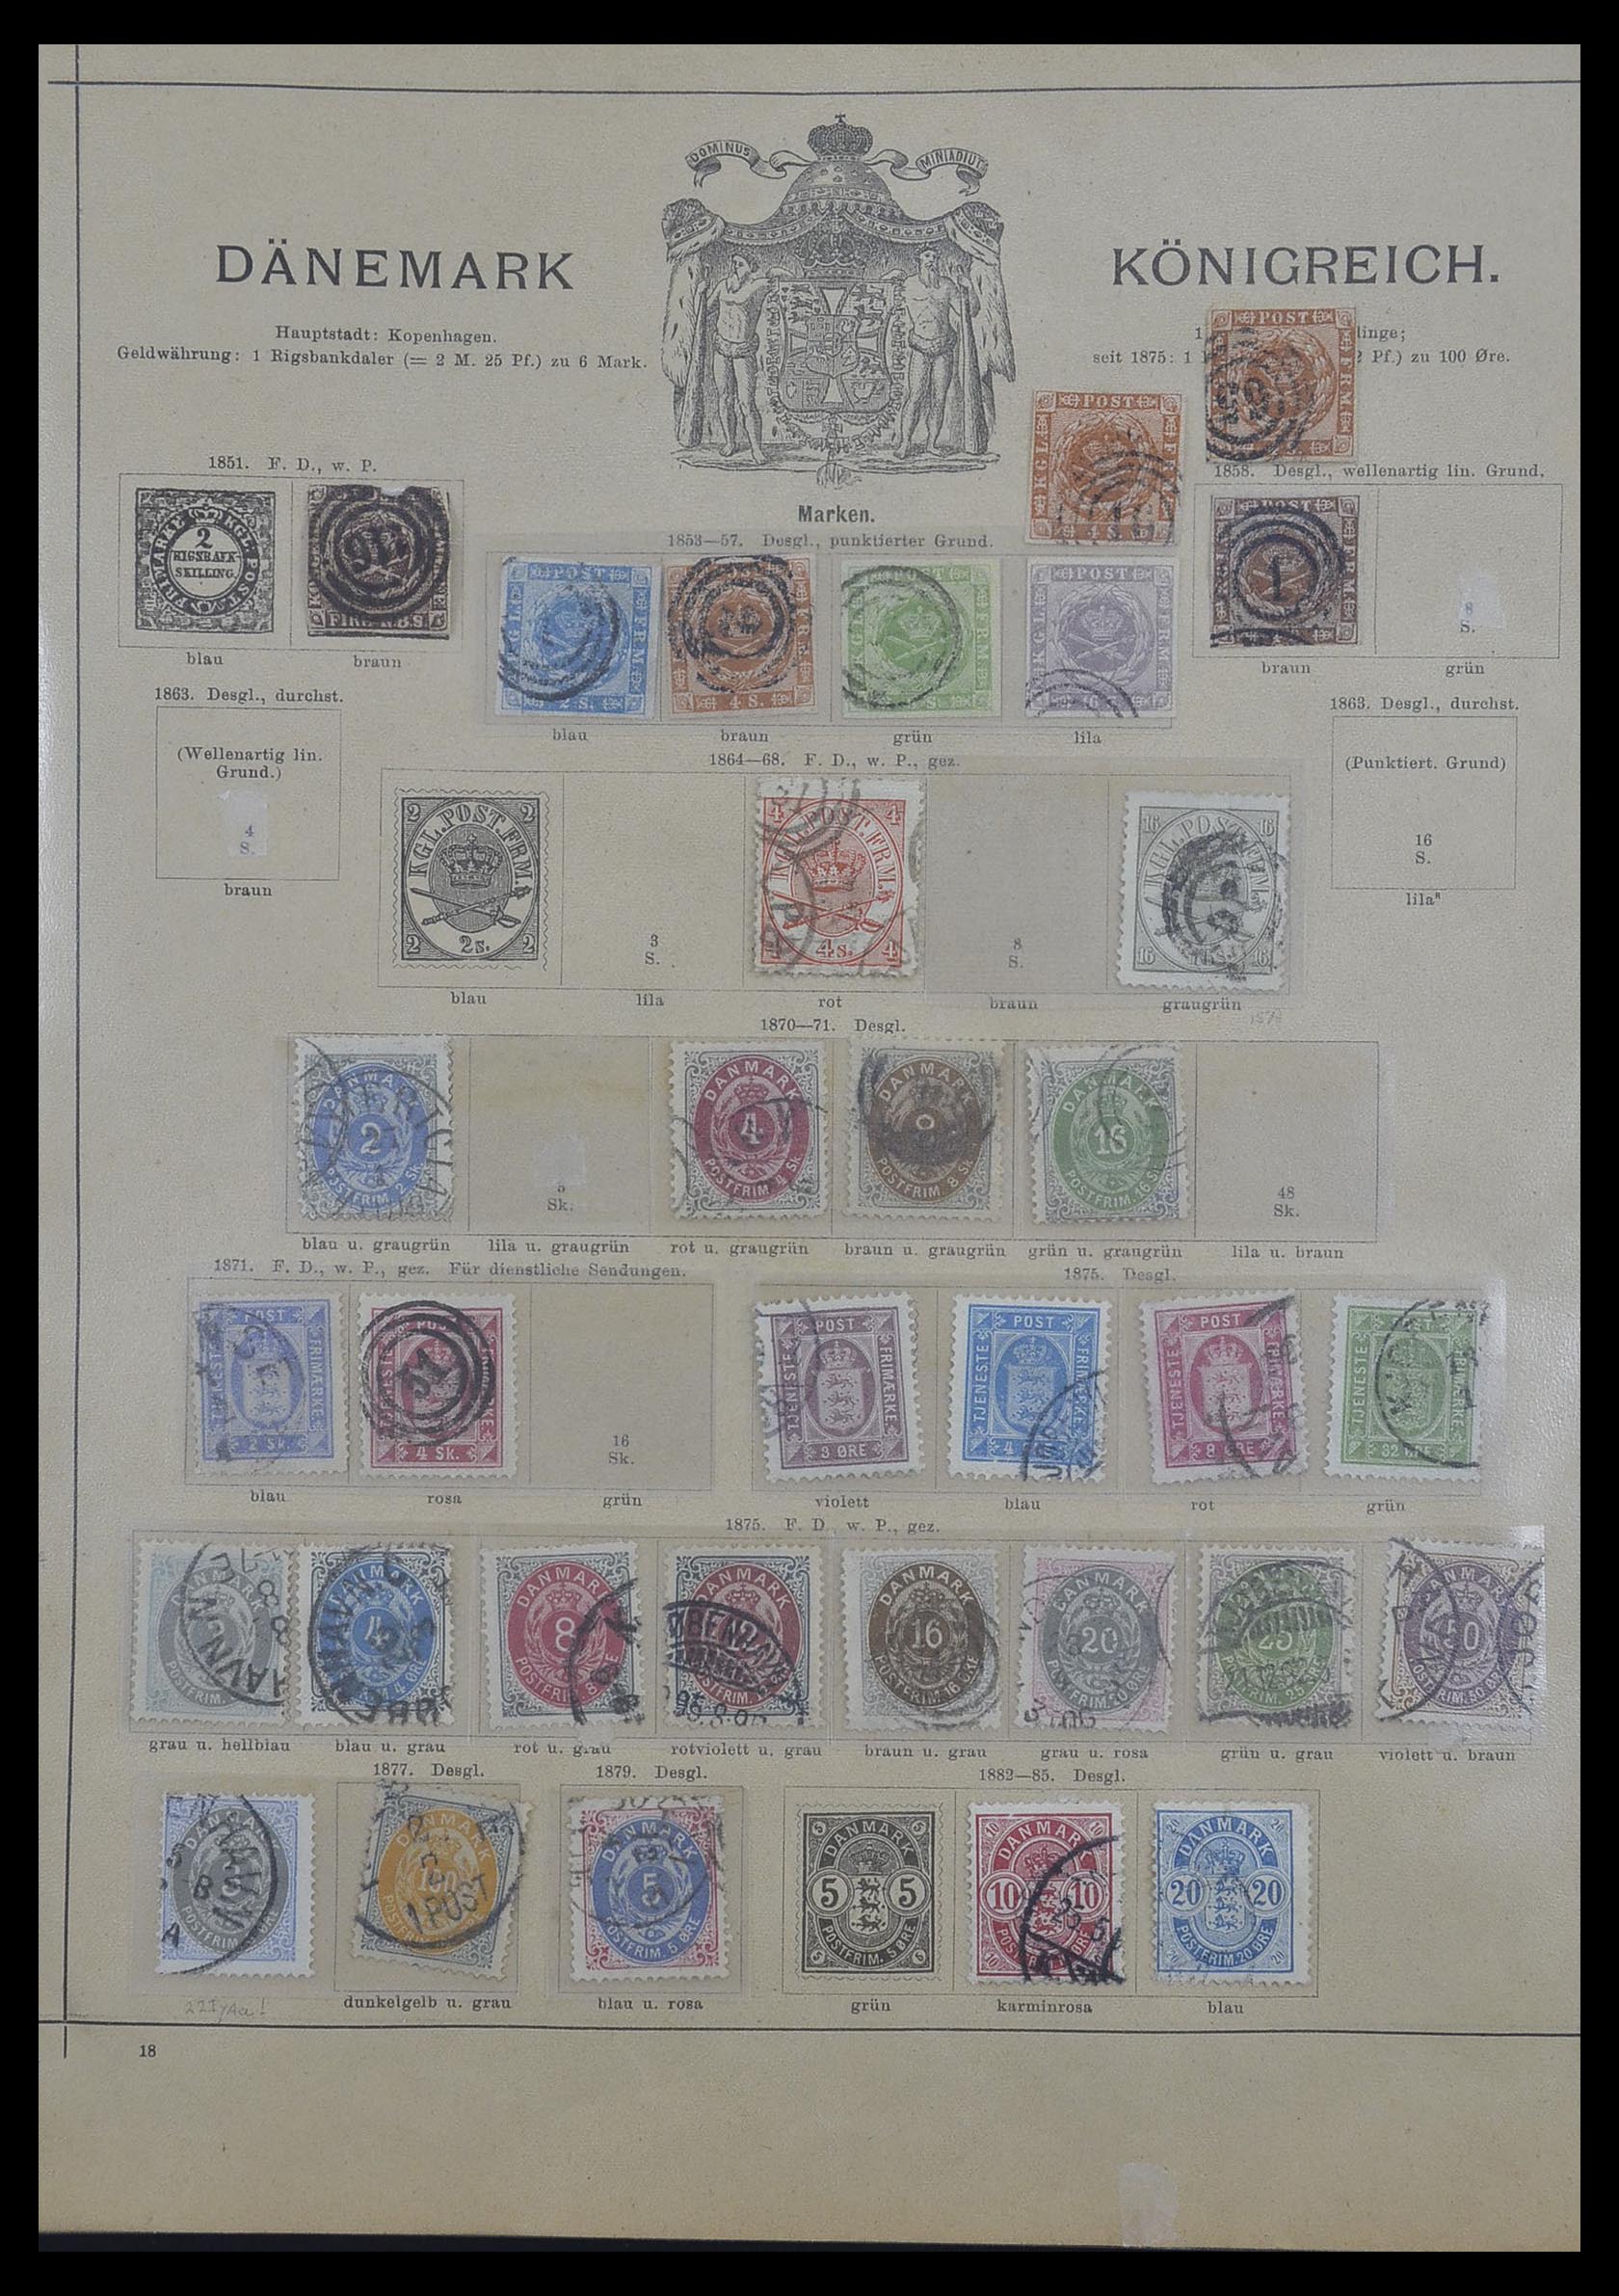 33628 001 - Stamp collection 33628 Scandinavia 1851-1900.